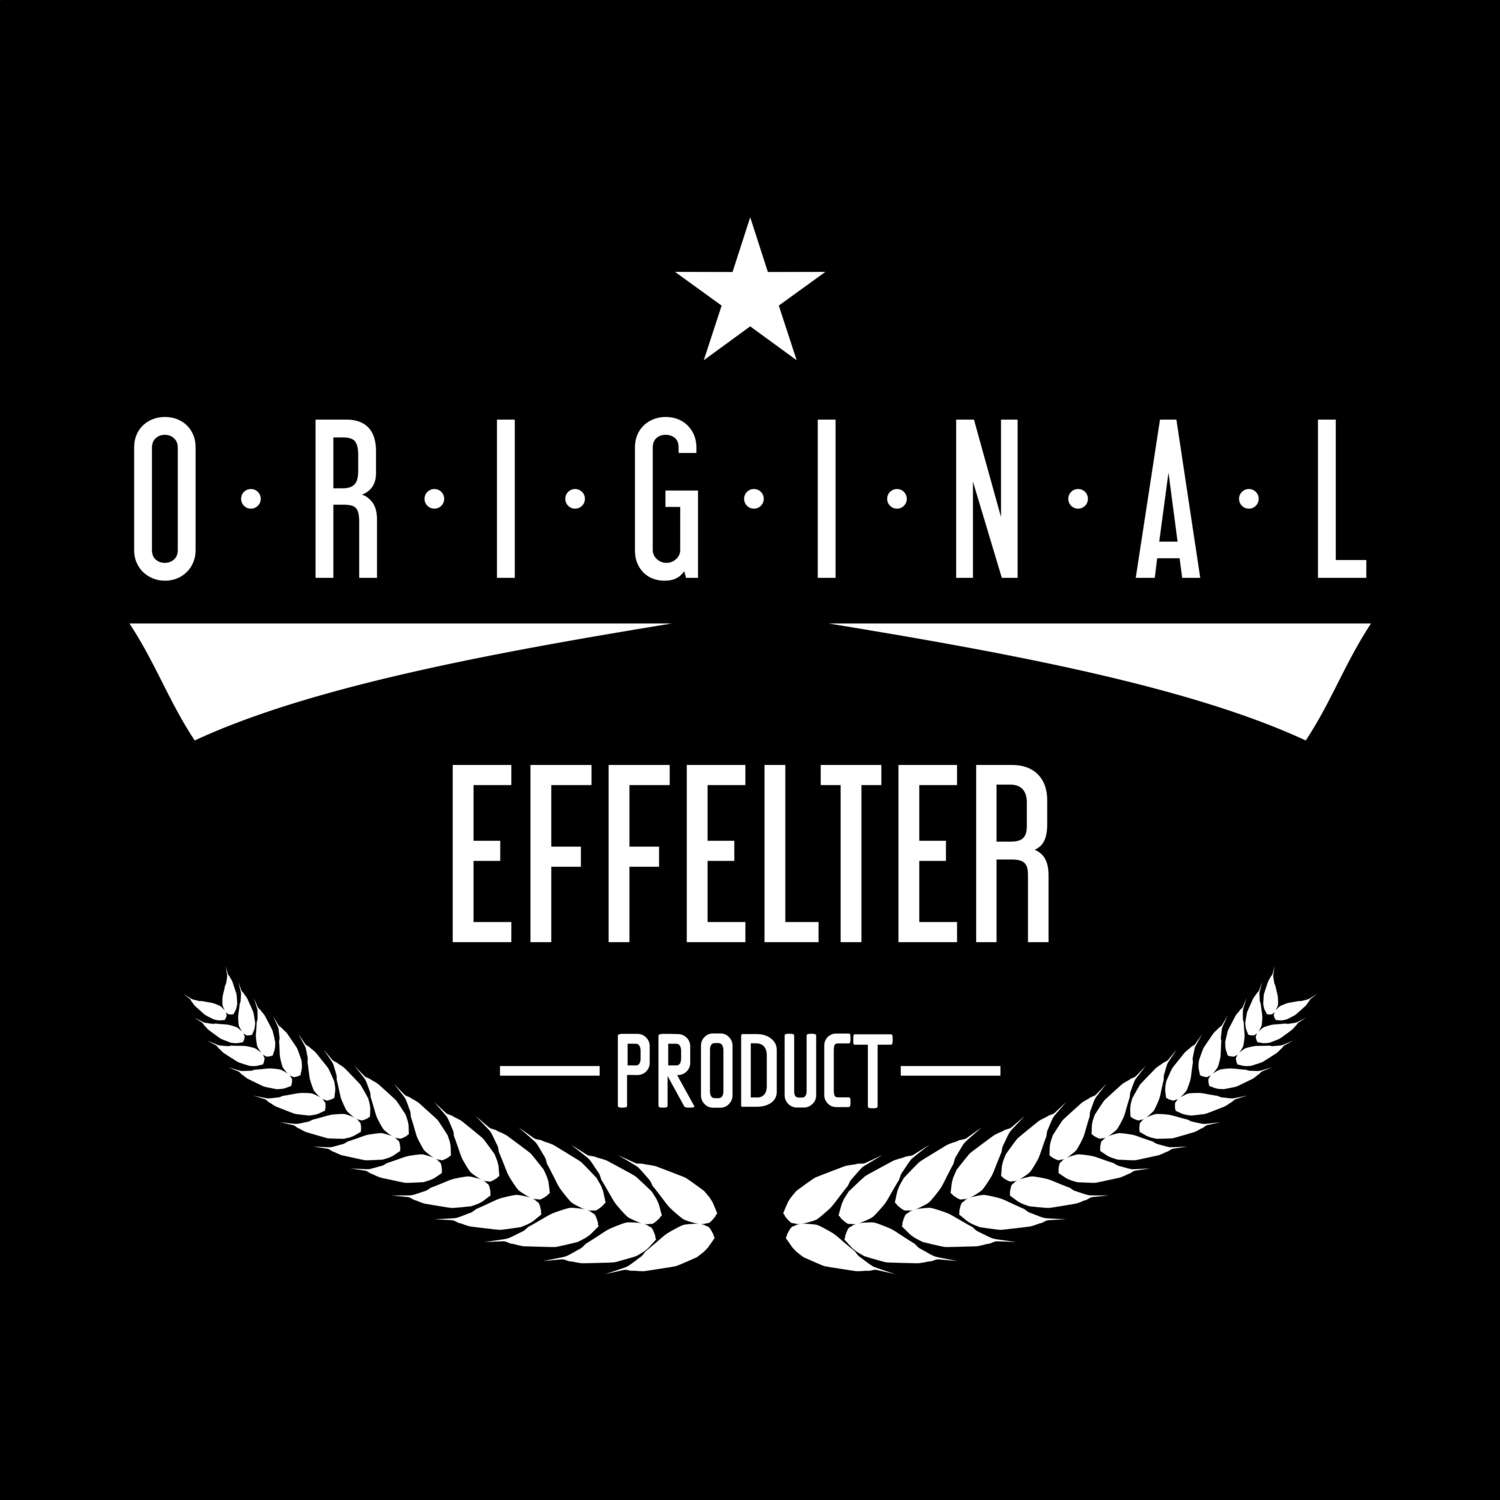 Effelter T-Shirt »Original Product«